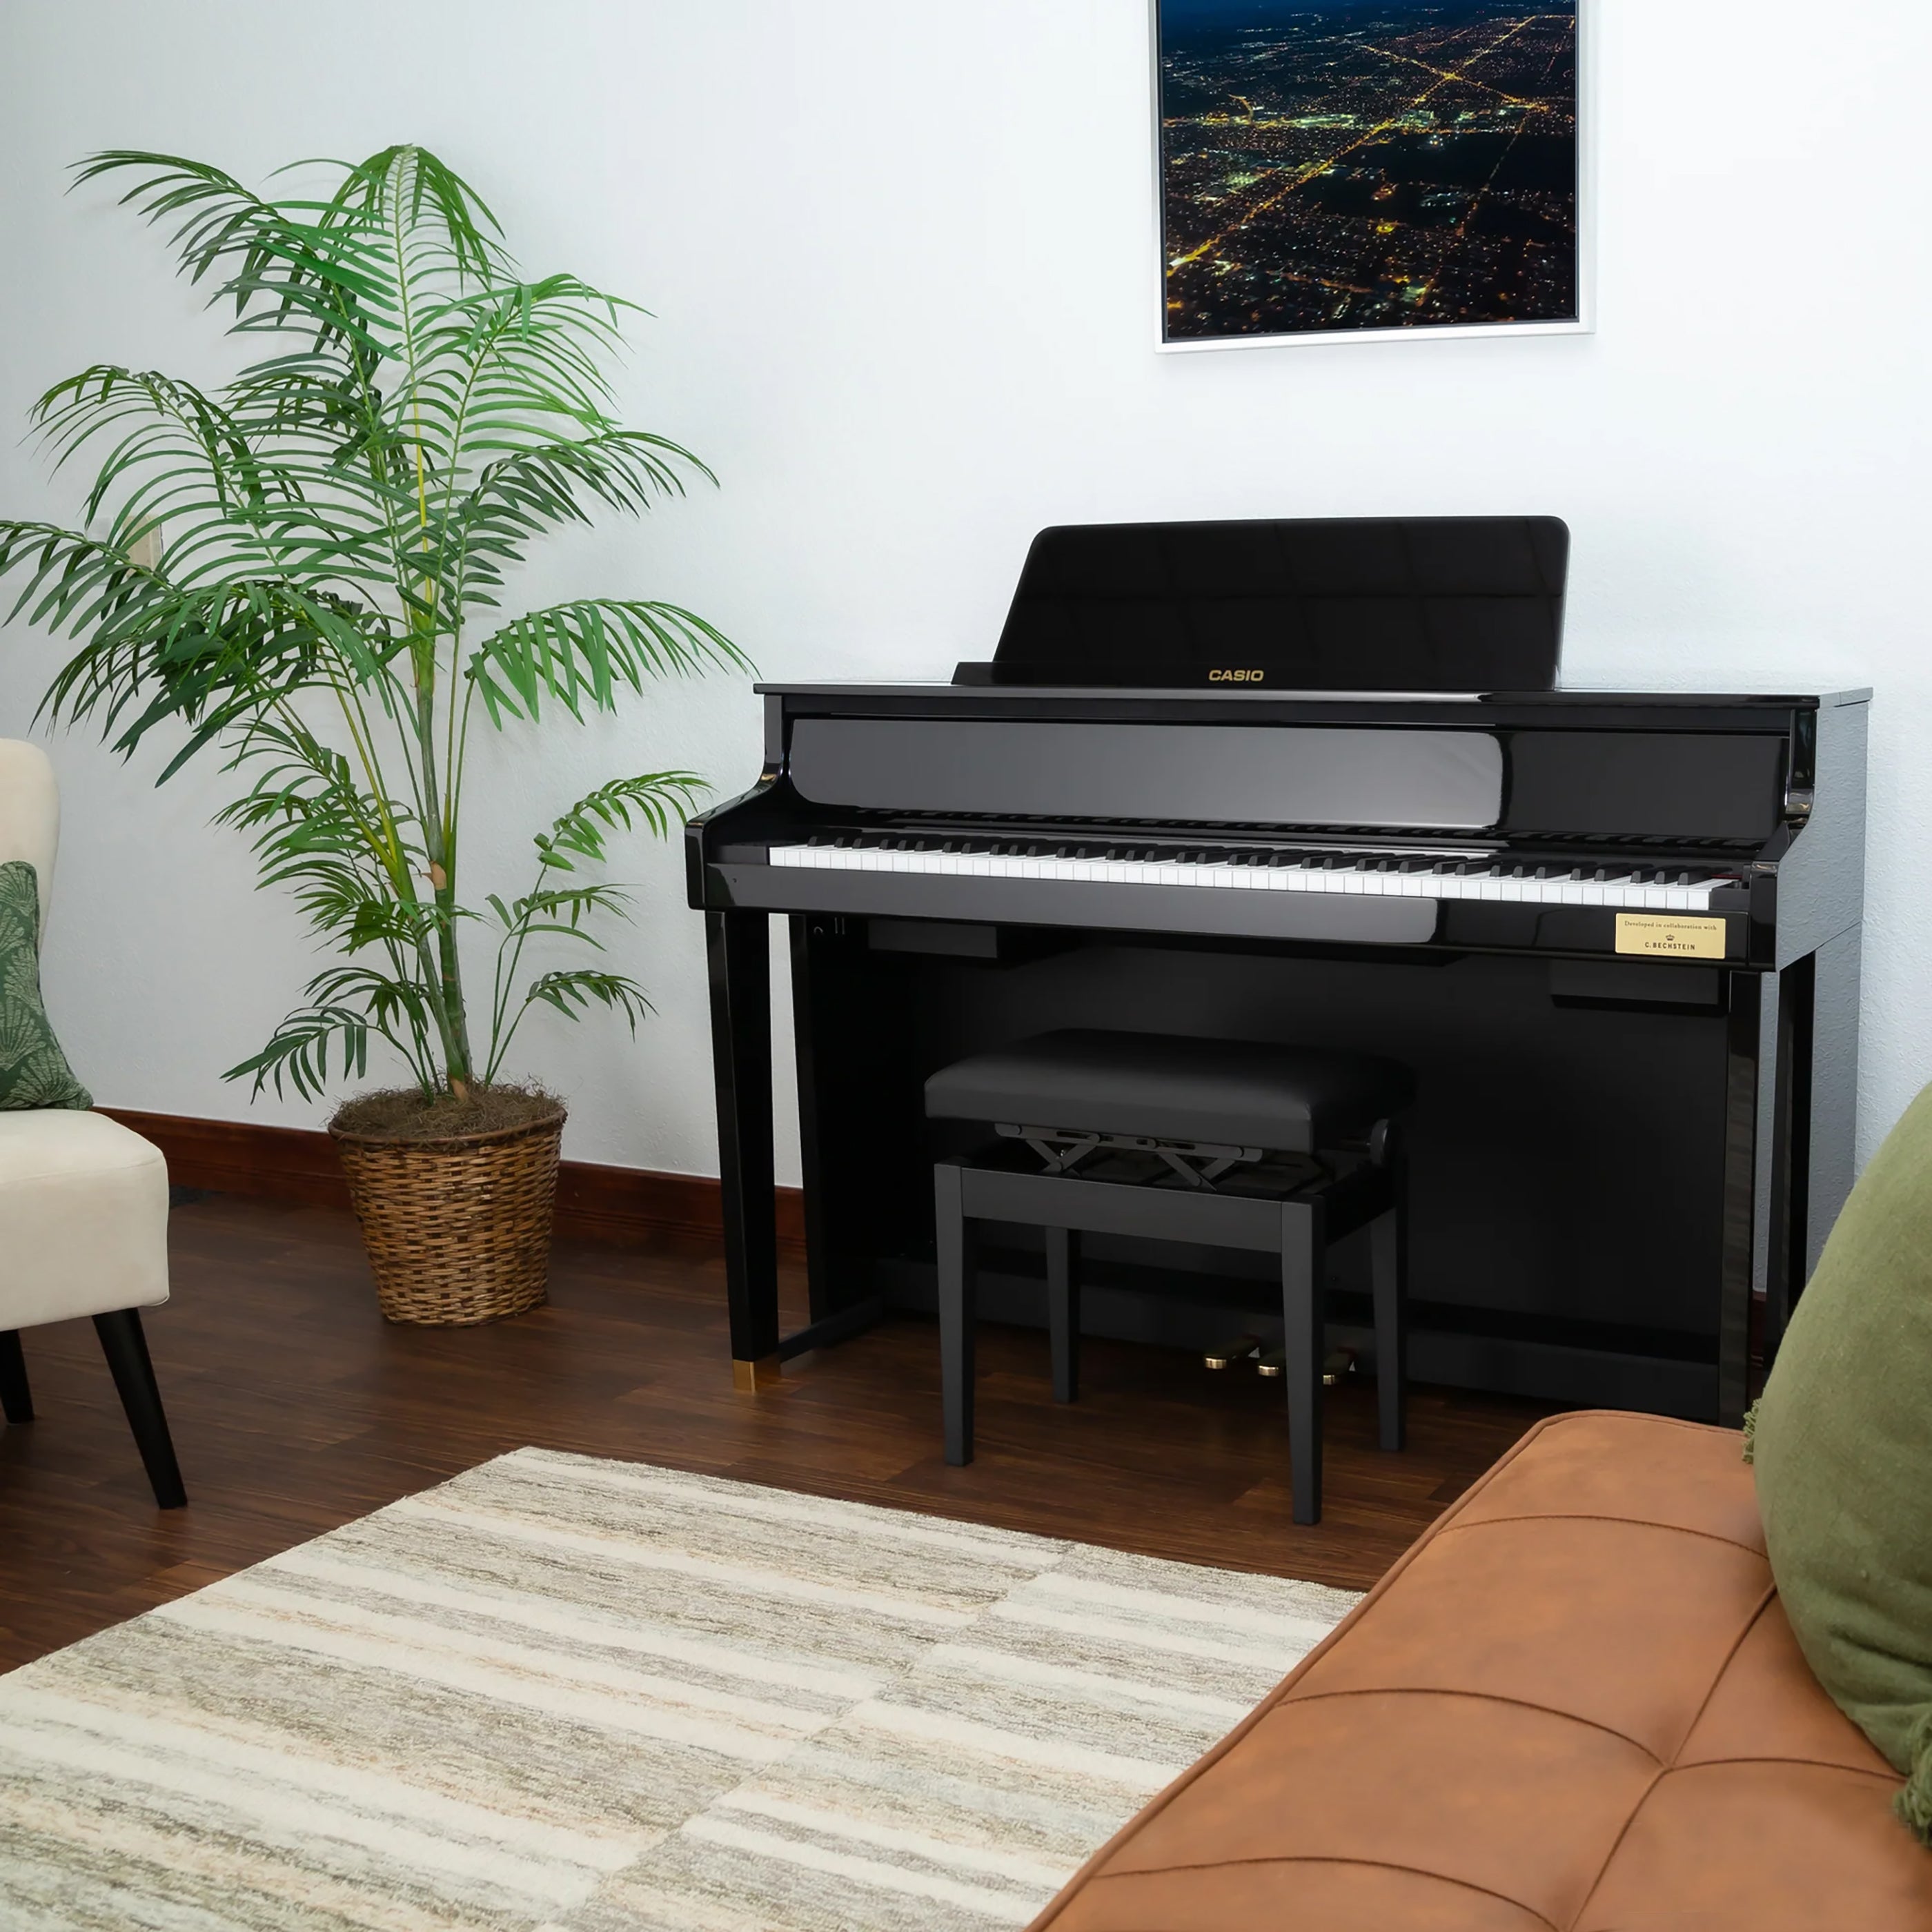 Casio Celviano Grand Hybrid GP-510 Digital Piano - Black Polish - Left angle in a stylish living room